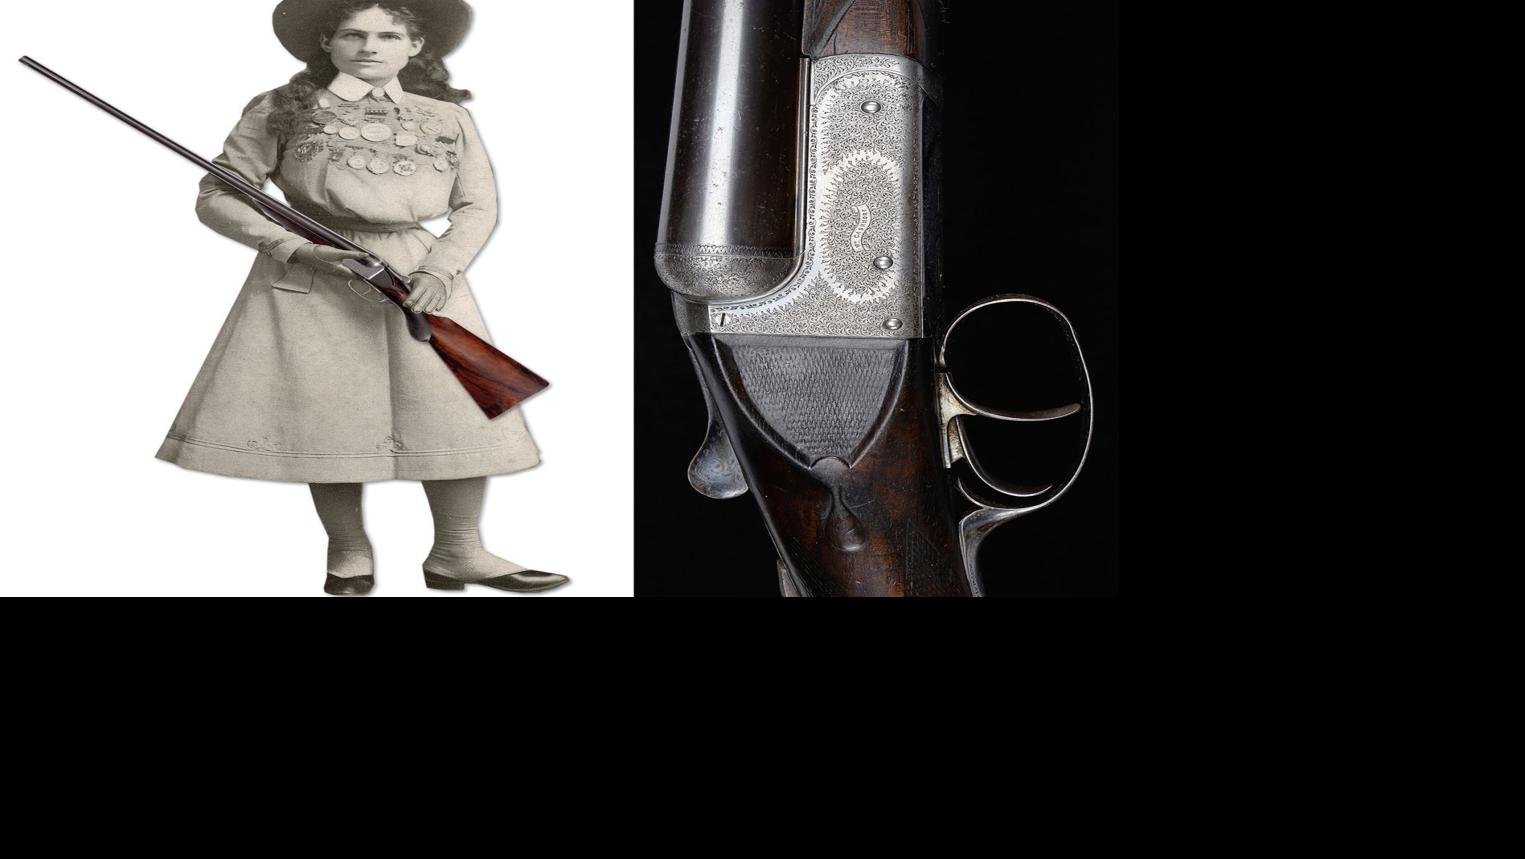 Annie Oakley's circa 1893 shotgun hits target, and then some